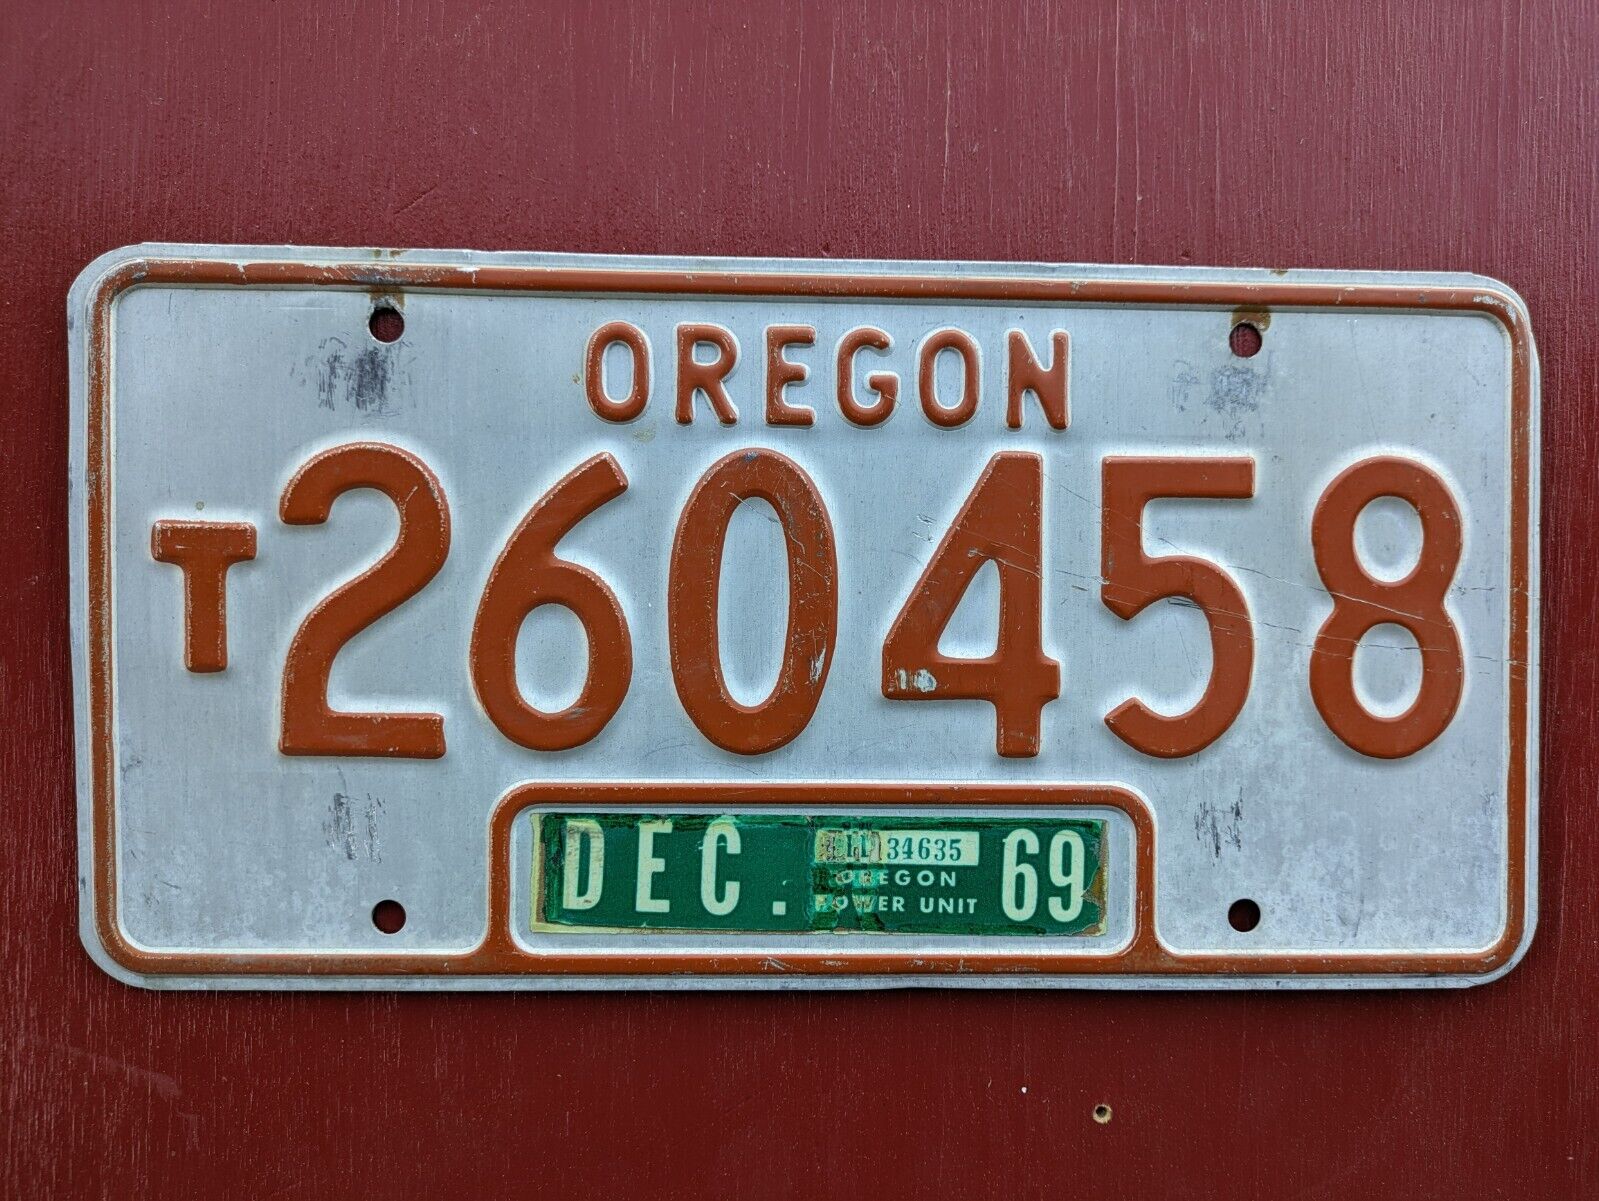 1969 Oregon license plate T 260458